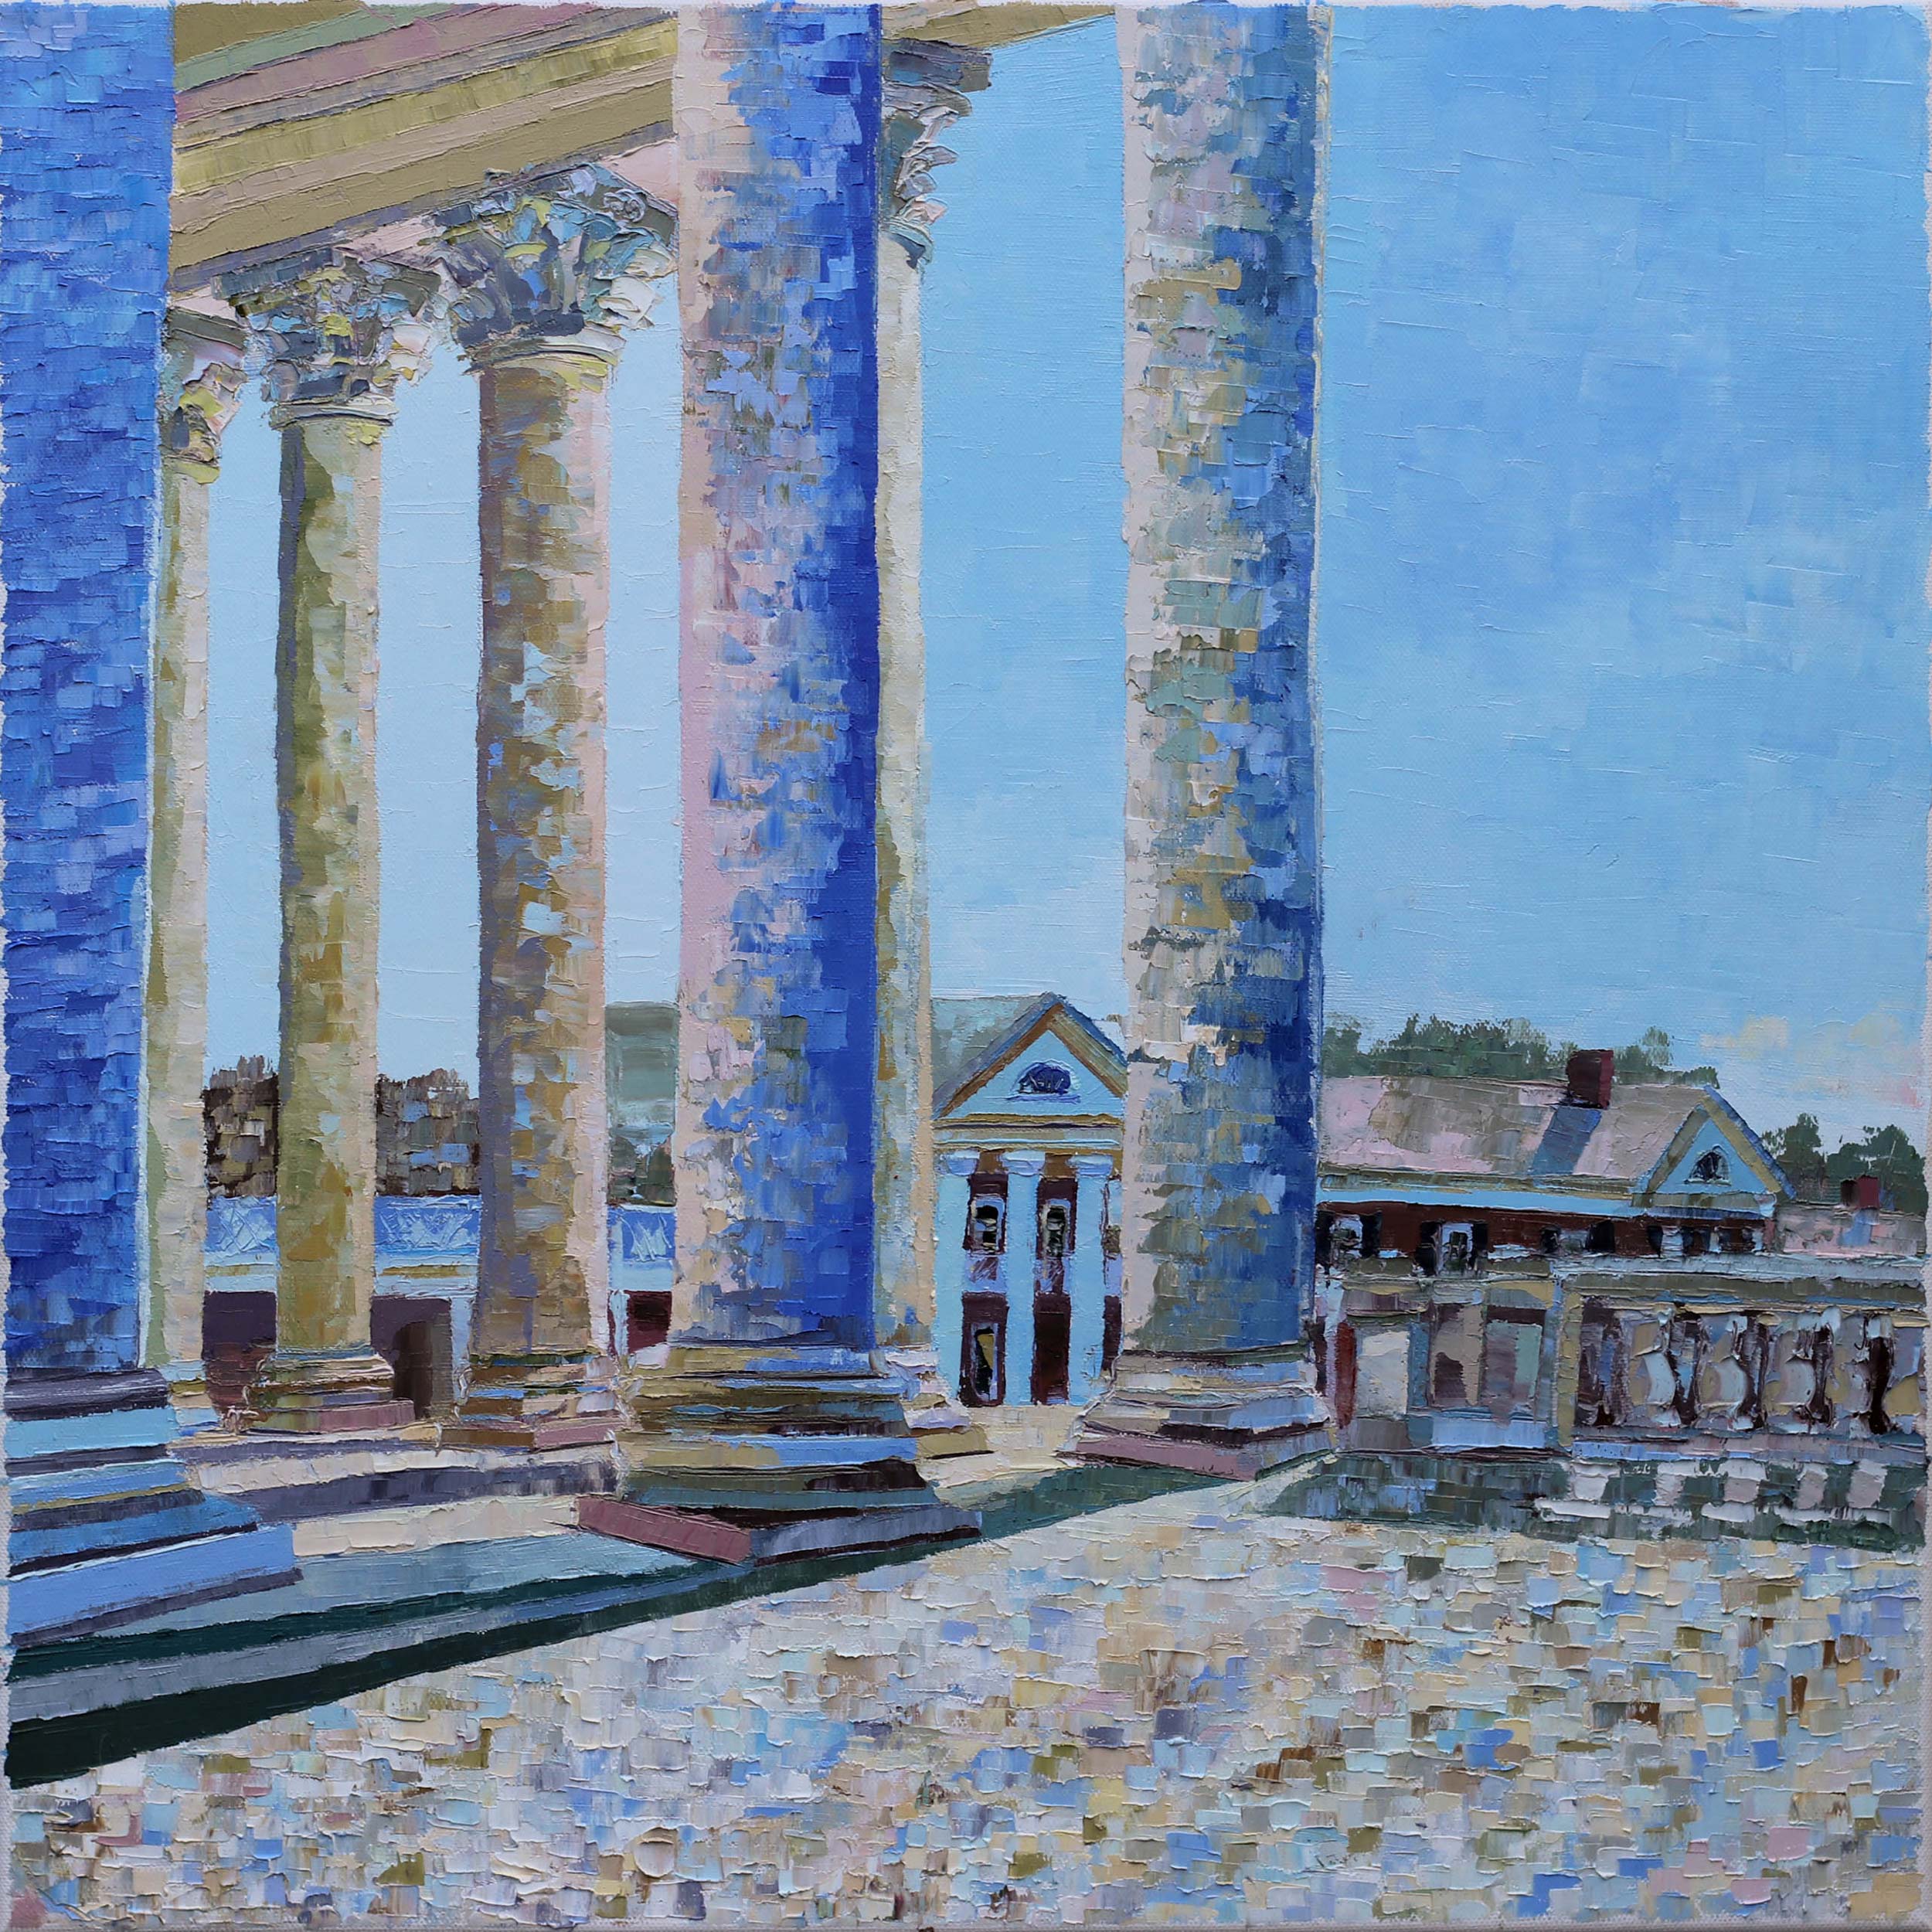 Davis’ painting “Academical Village II” views the Lawn through the pillars of the Rotunda